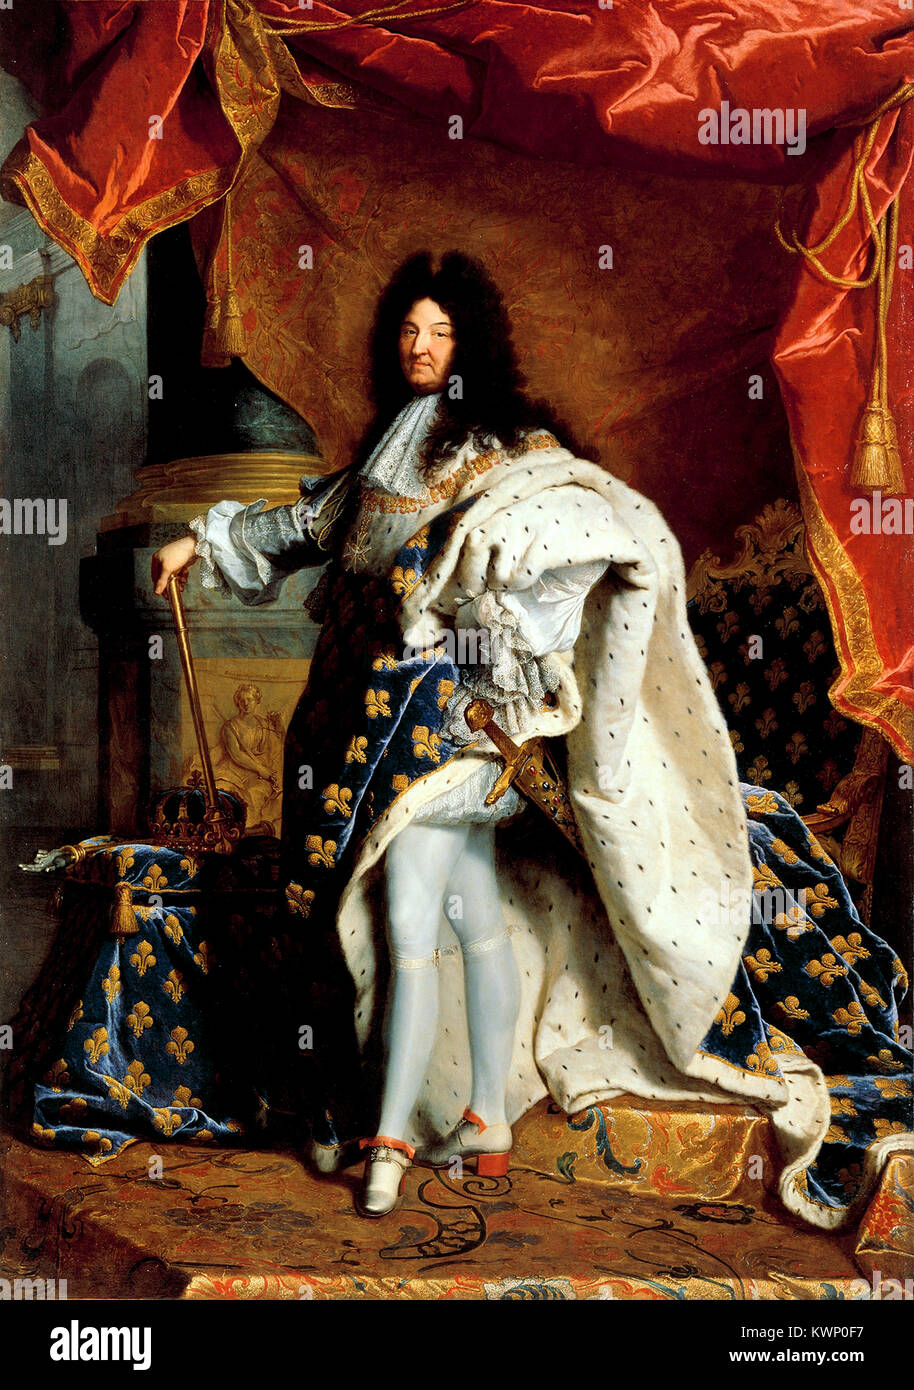 Luigi XIV Re di Francia Luigi XIV (5 settembre 1638 - 1 settembre 1715), regnò come Re di Francia dal 1643 fino al 1715 Foto Stock